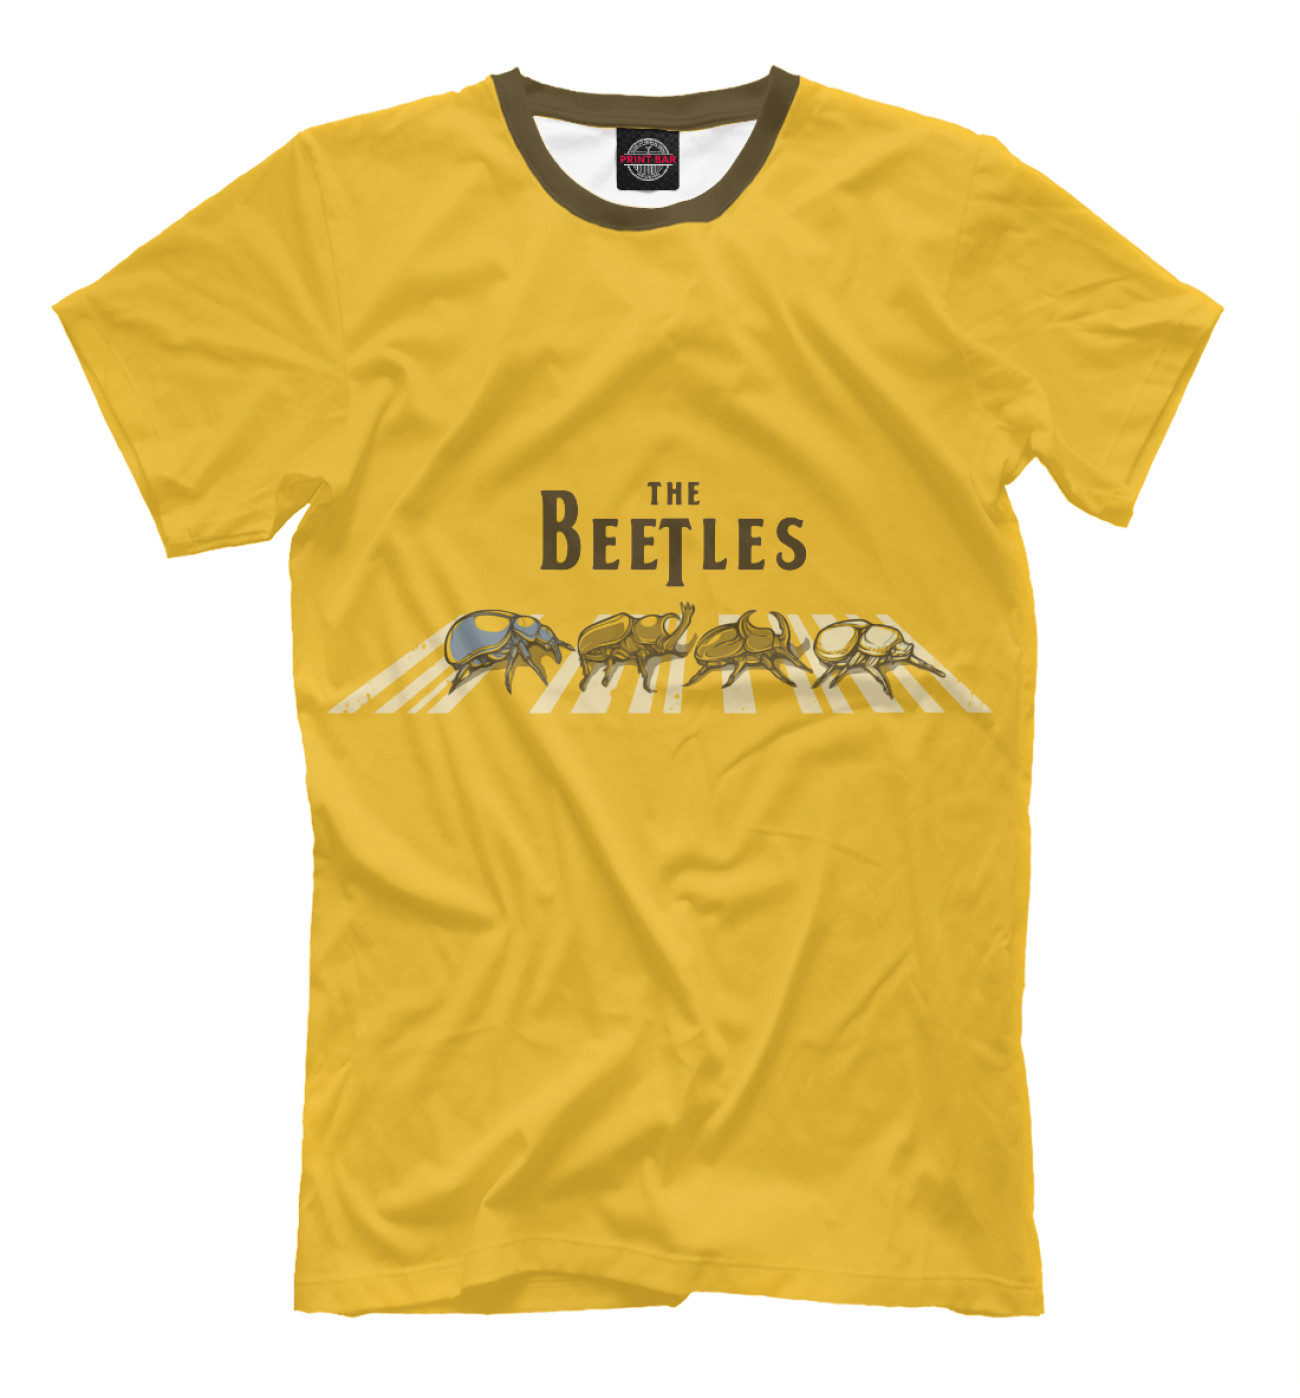 Мужская Футболка The bEEtles, артикул: NAS-507252-fut-2